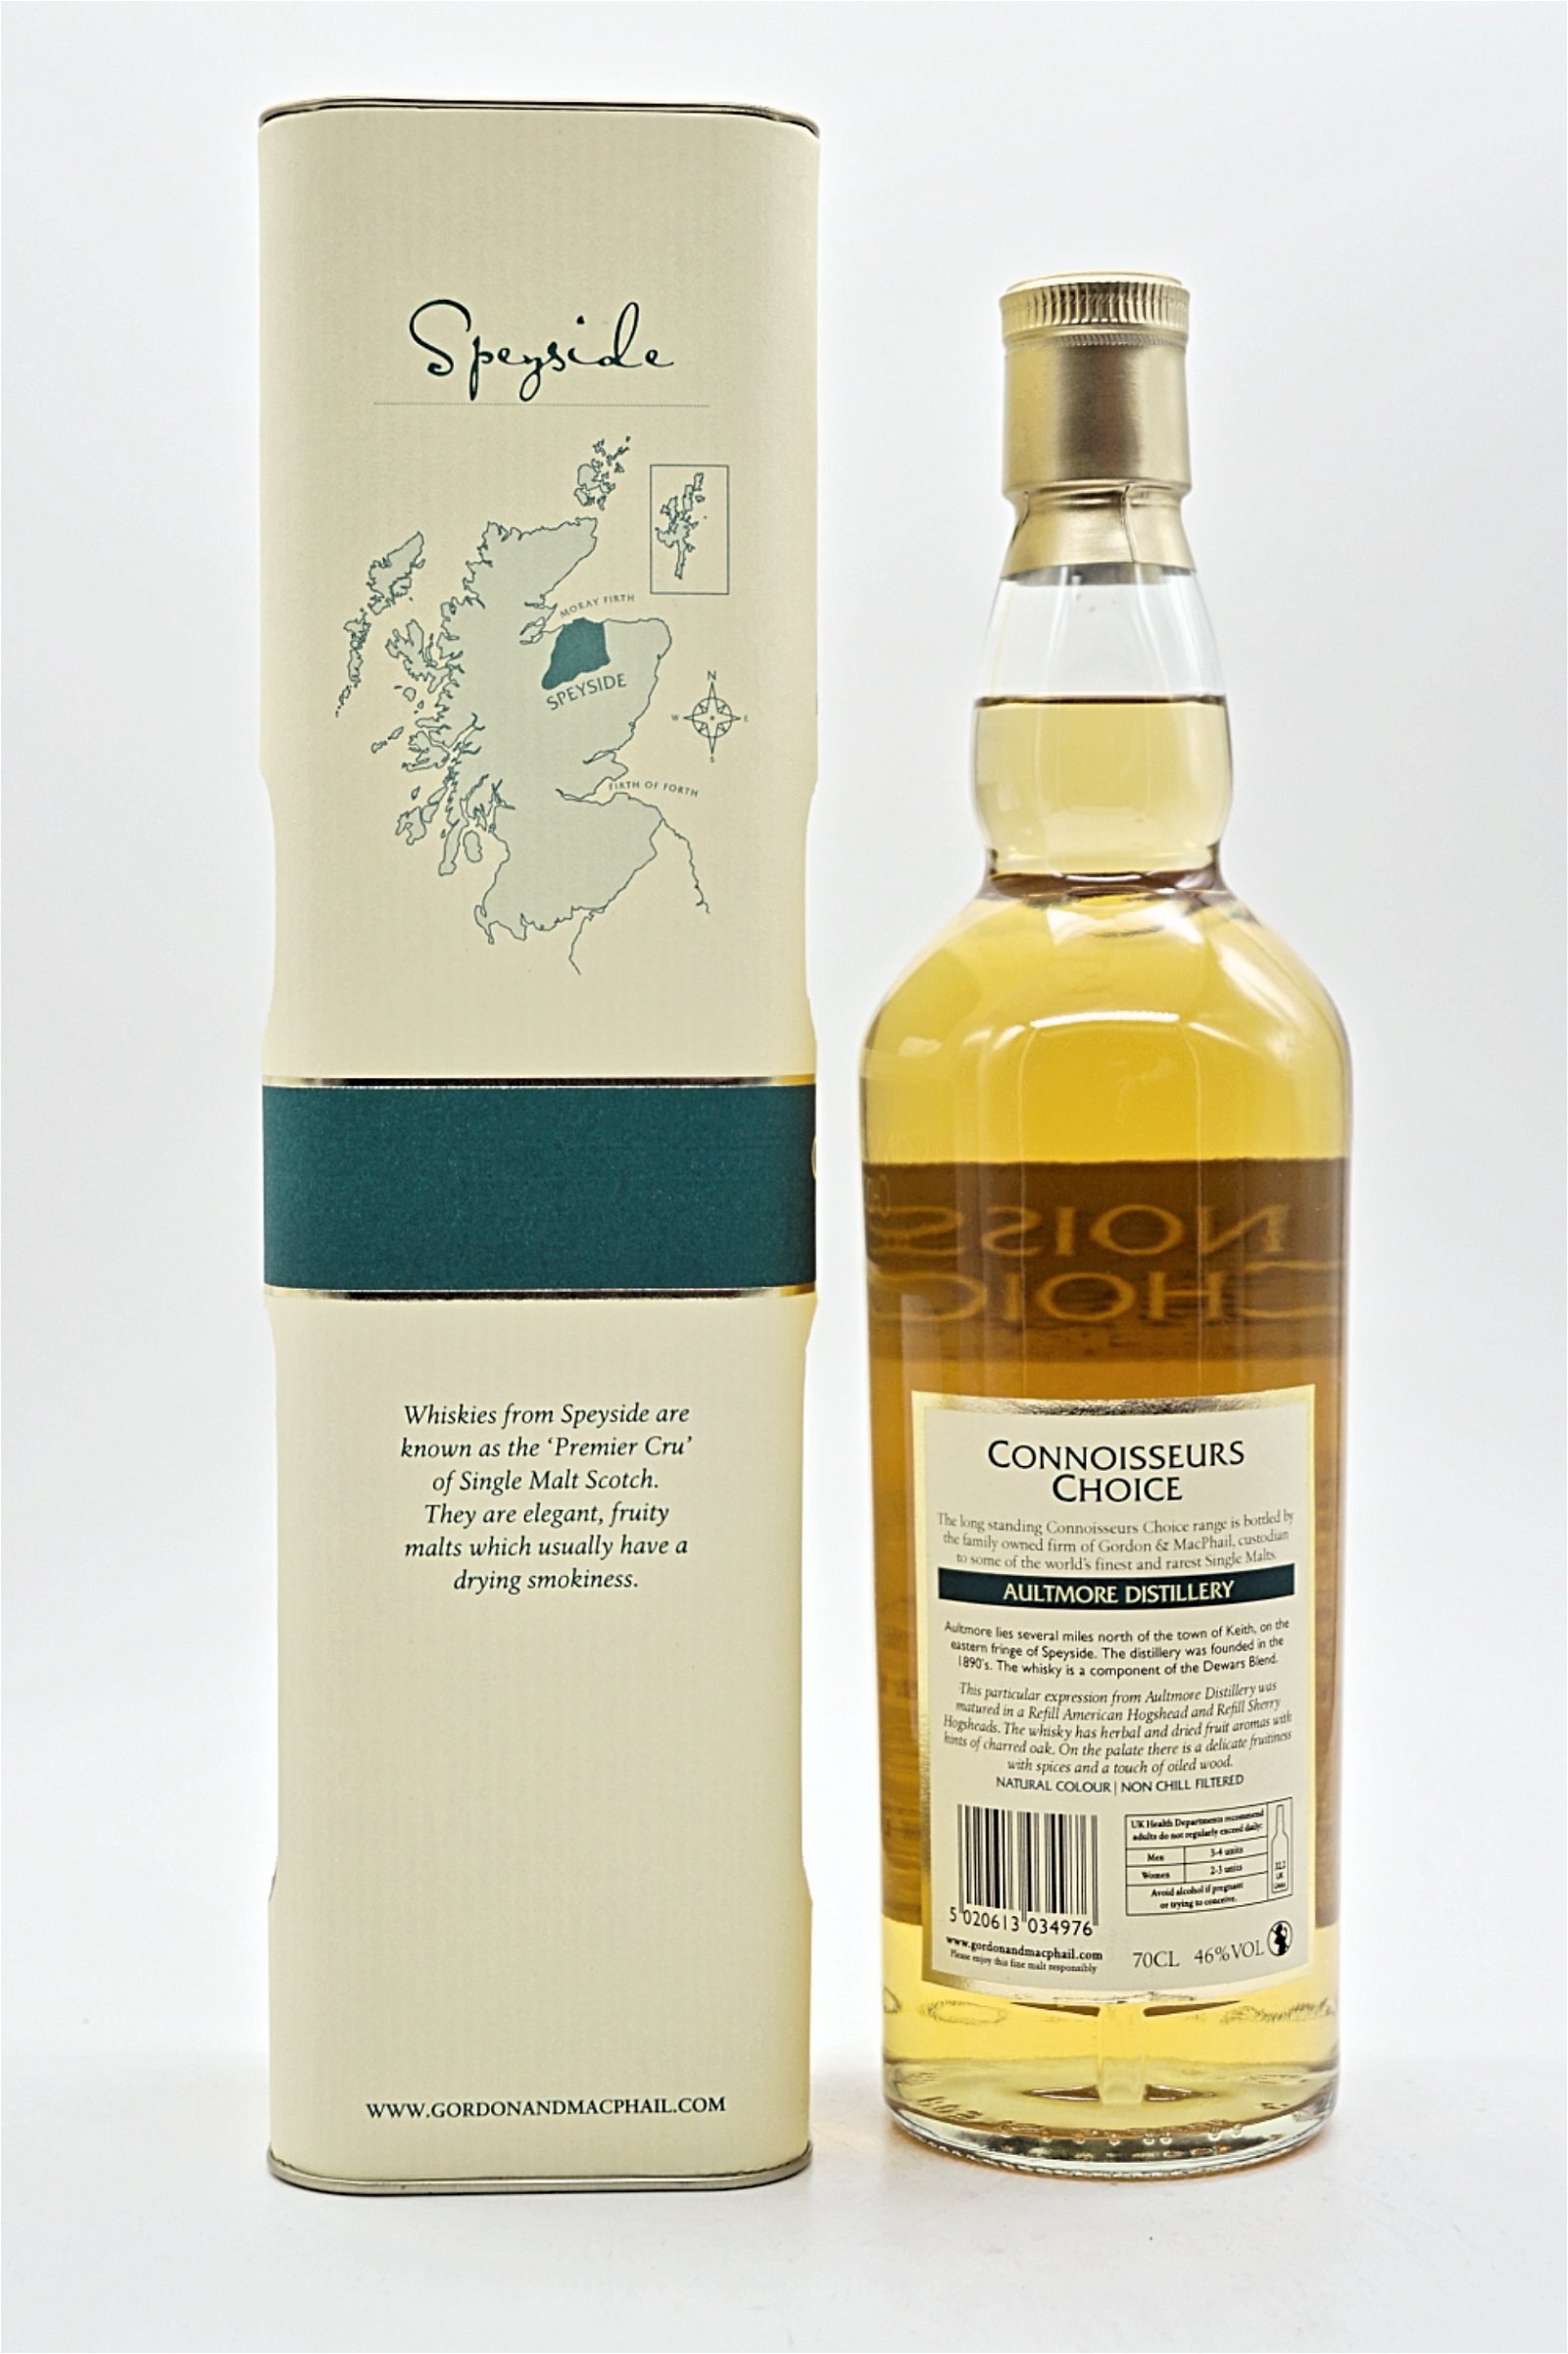 Gordon & Macphail Connoisseurs Choice Aultmore Distillery 2000/2014 Single Malt Scotch Whisky